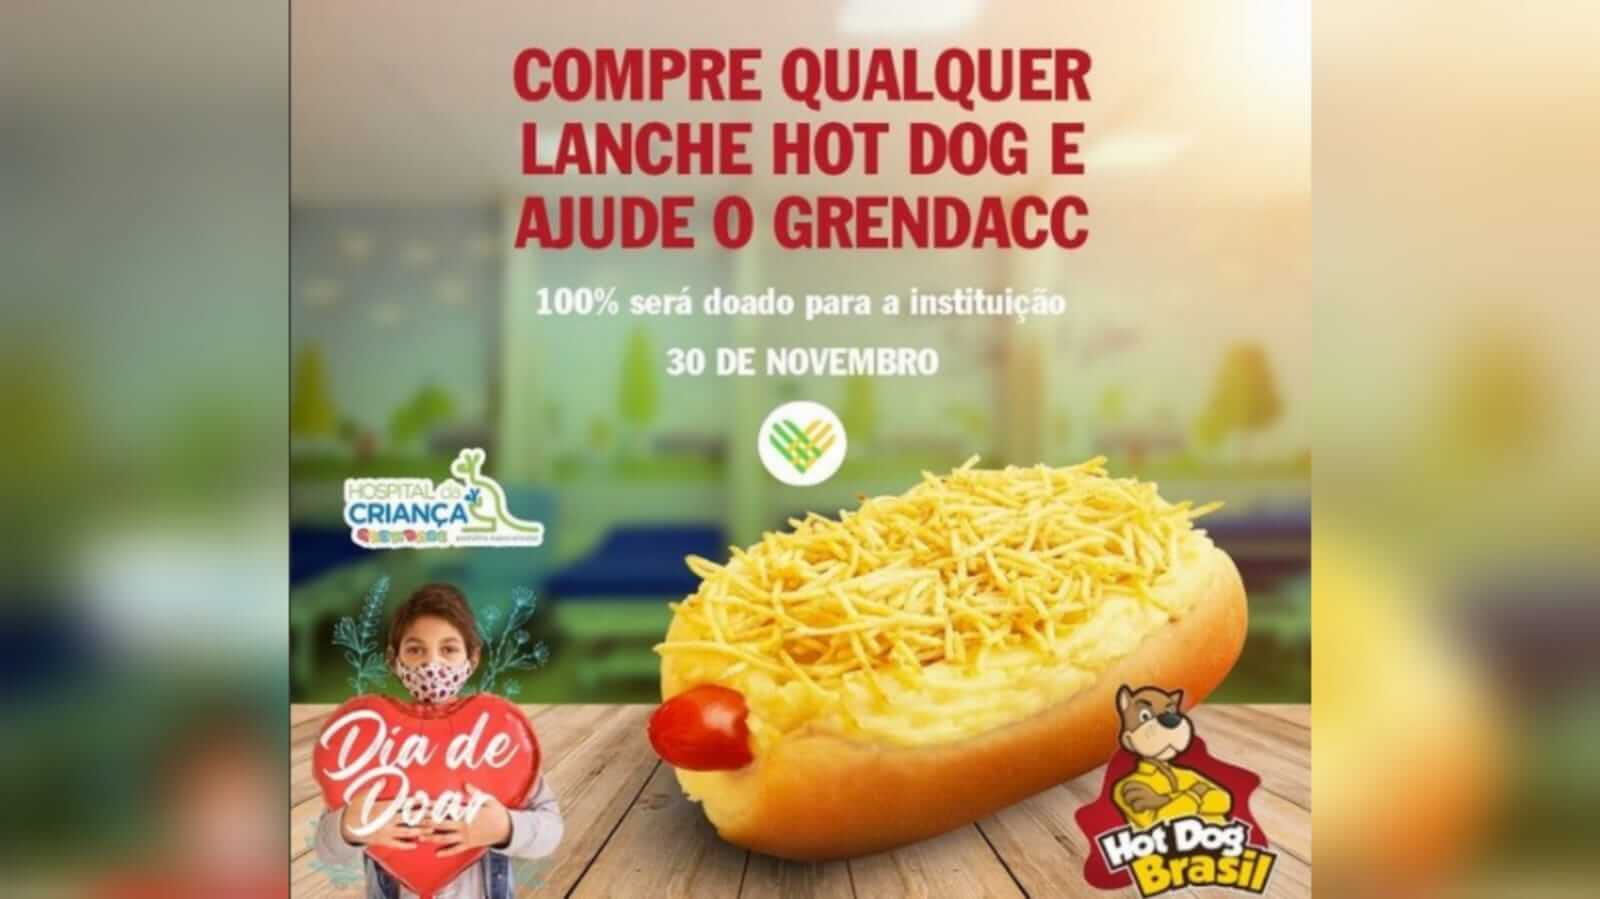 Post de campanha da Hot Dog Brasil com Grendacc